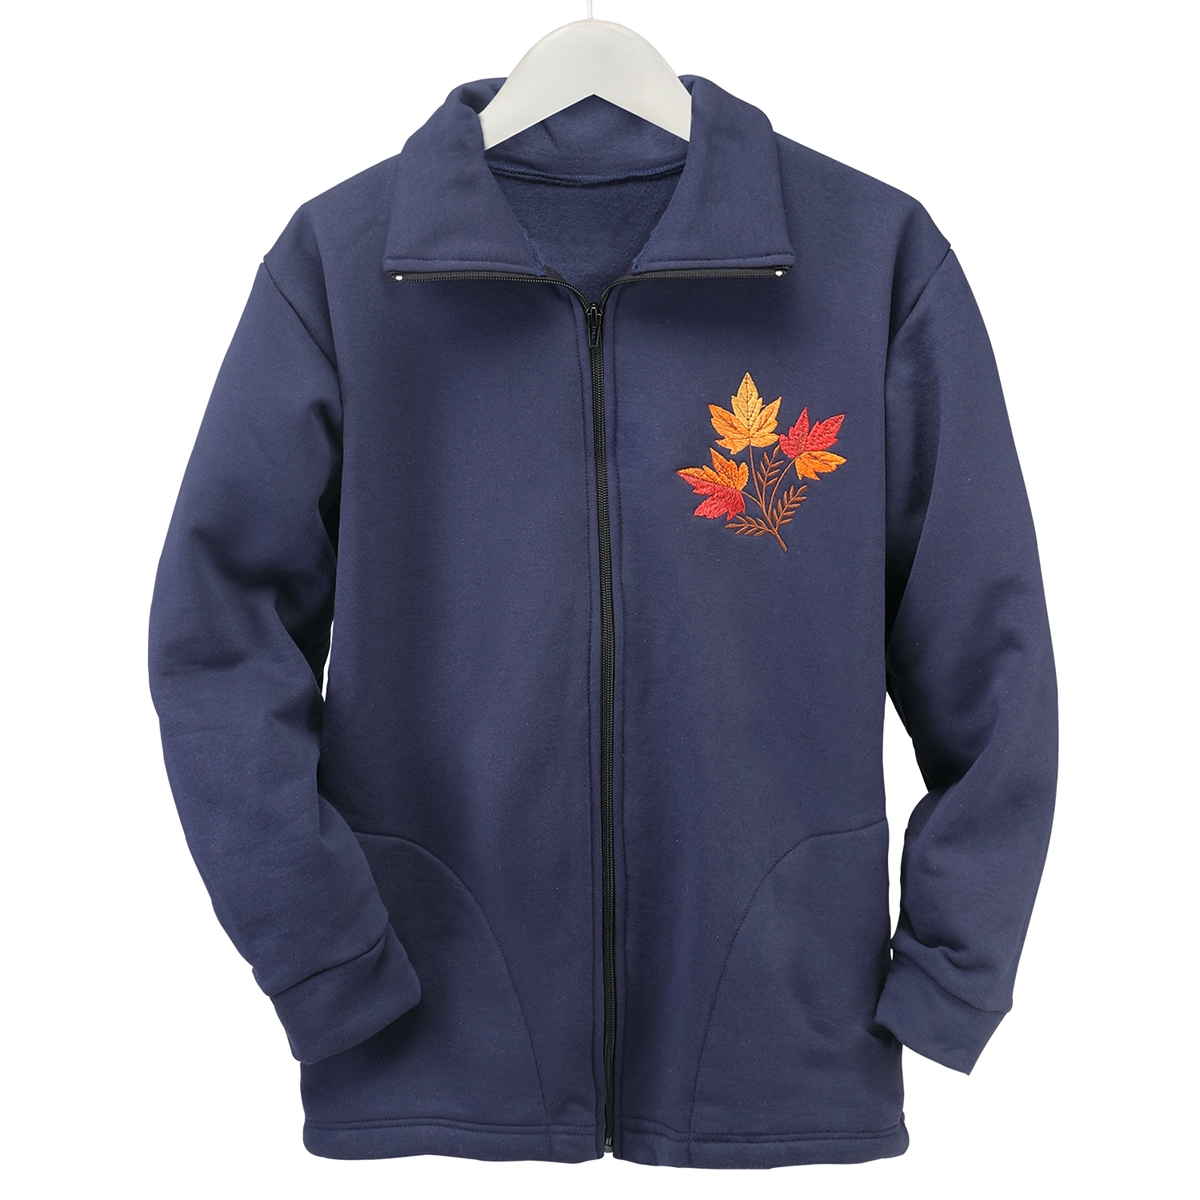 Autumn Leaves Full-Zip Sweatshirt